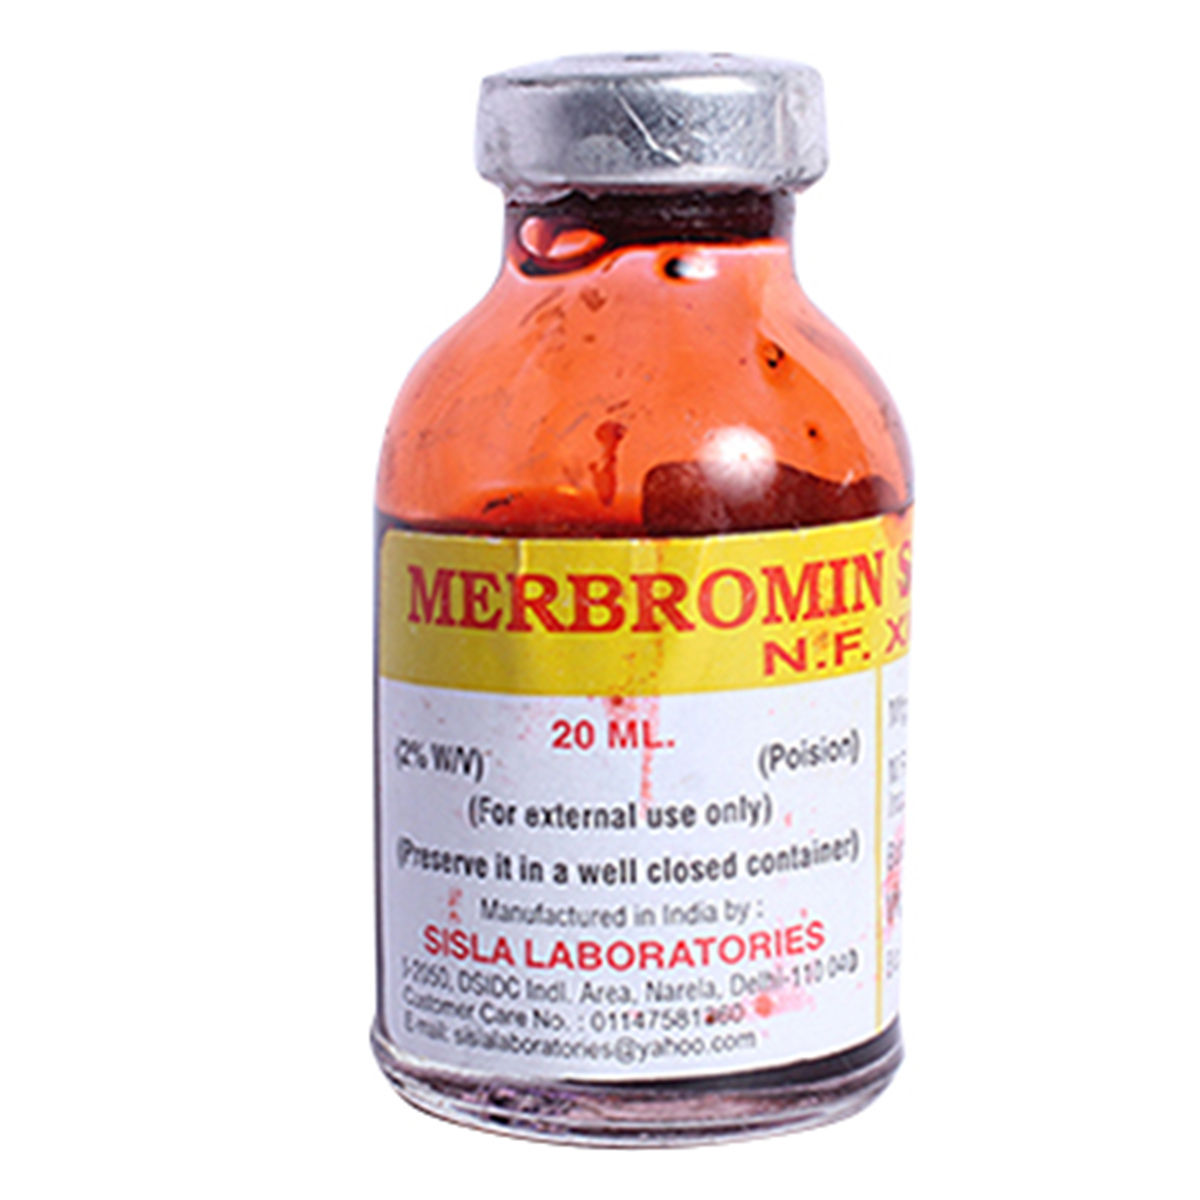 Buy Merbromin Solution 20 ml Online